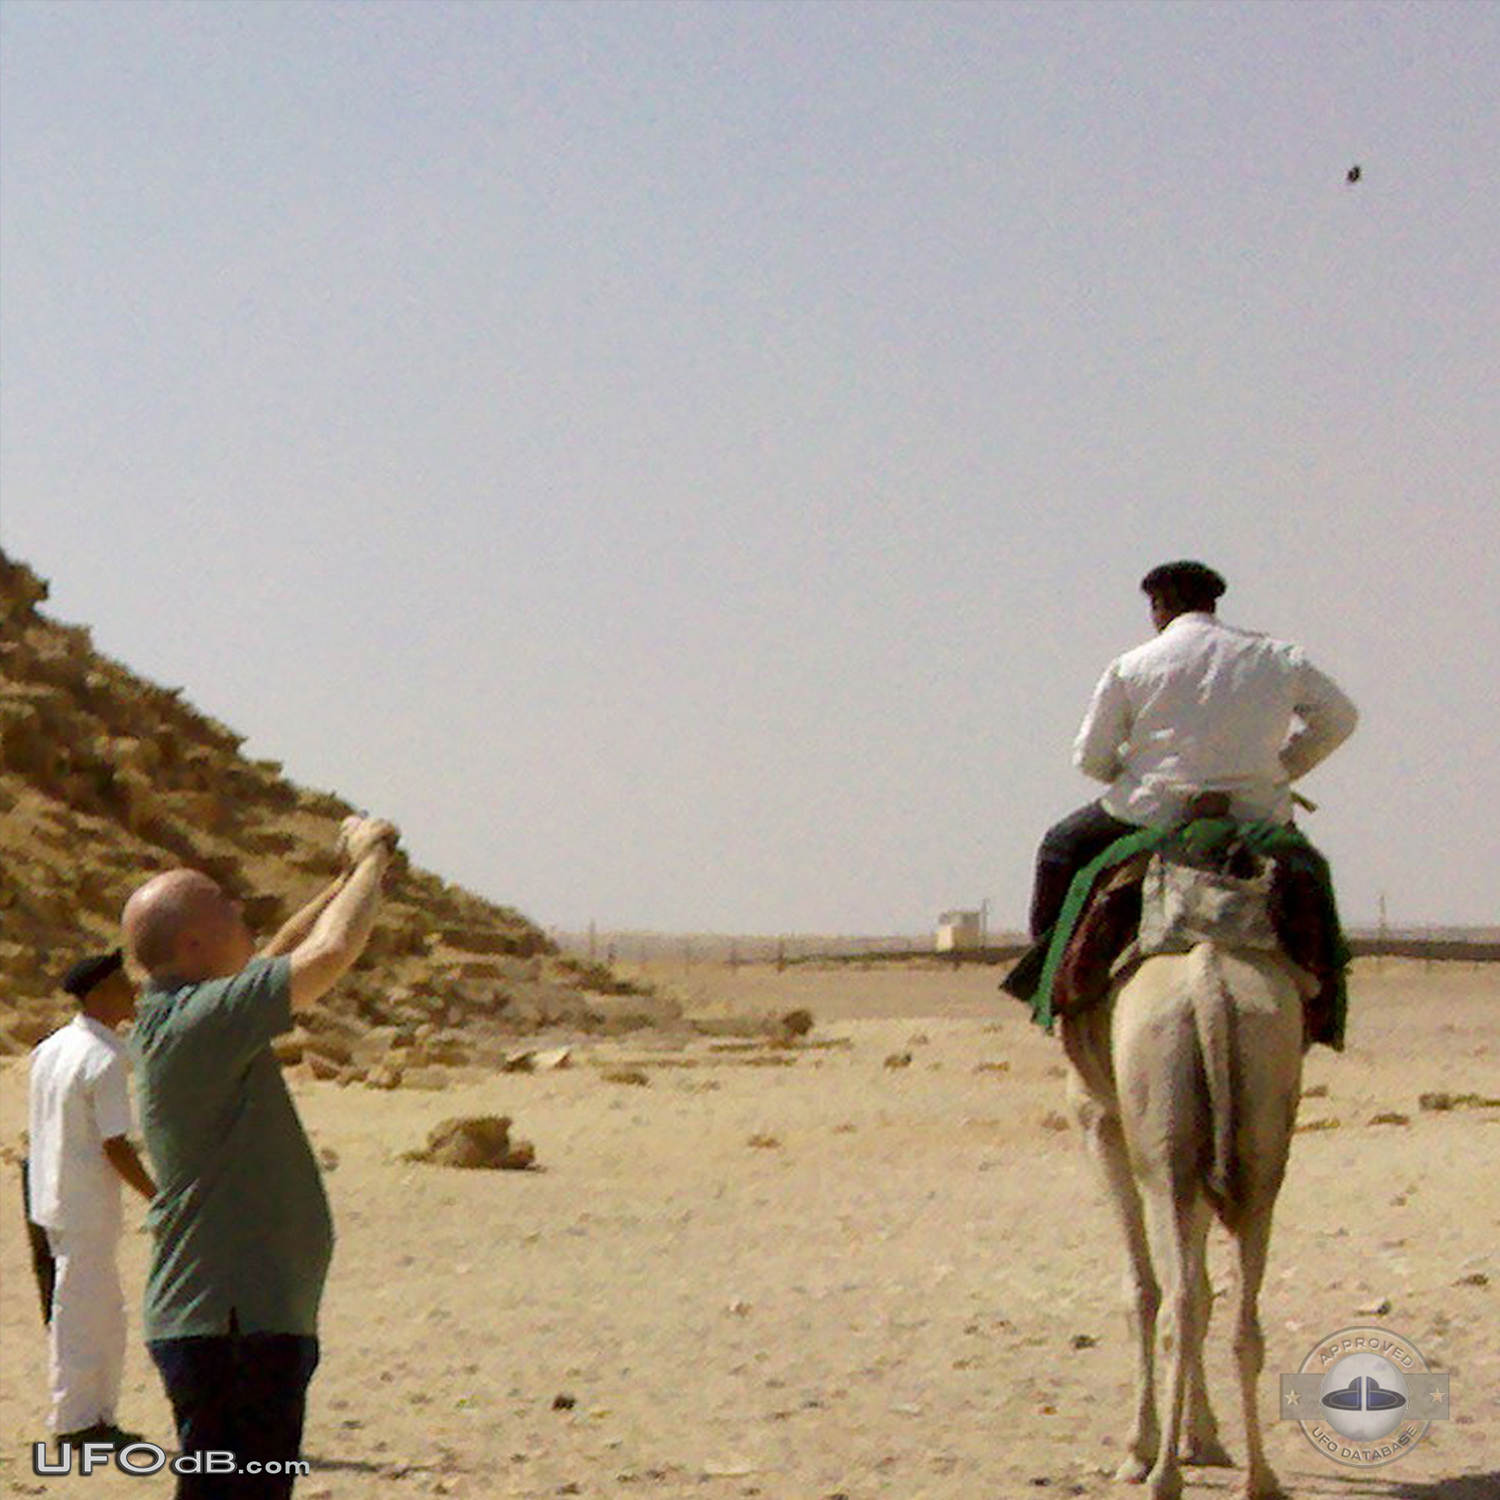 Tourist picture reveals UFO over Bent Pyramid near Dashur Egypt 2011 UFO Picture #478-1